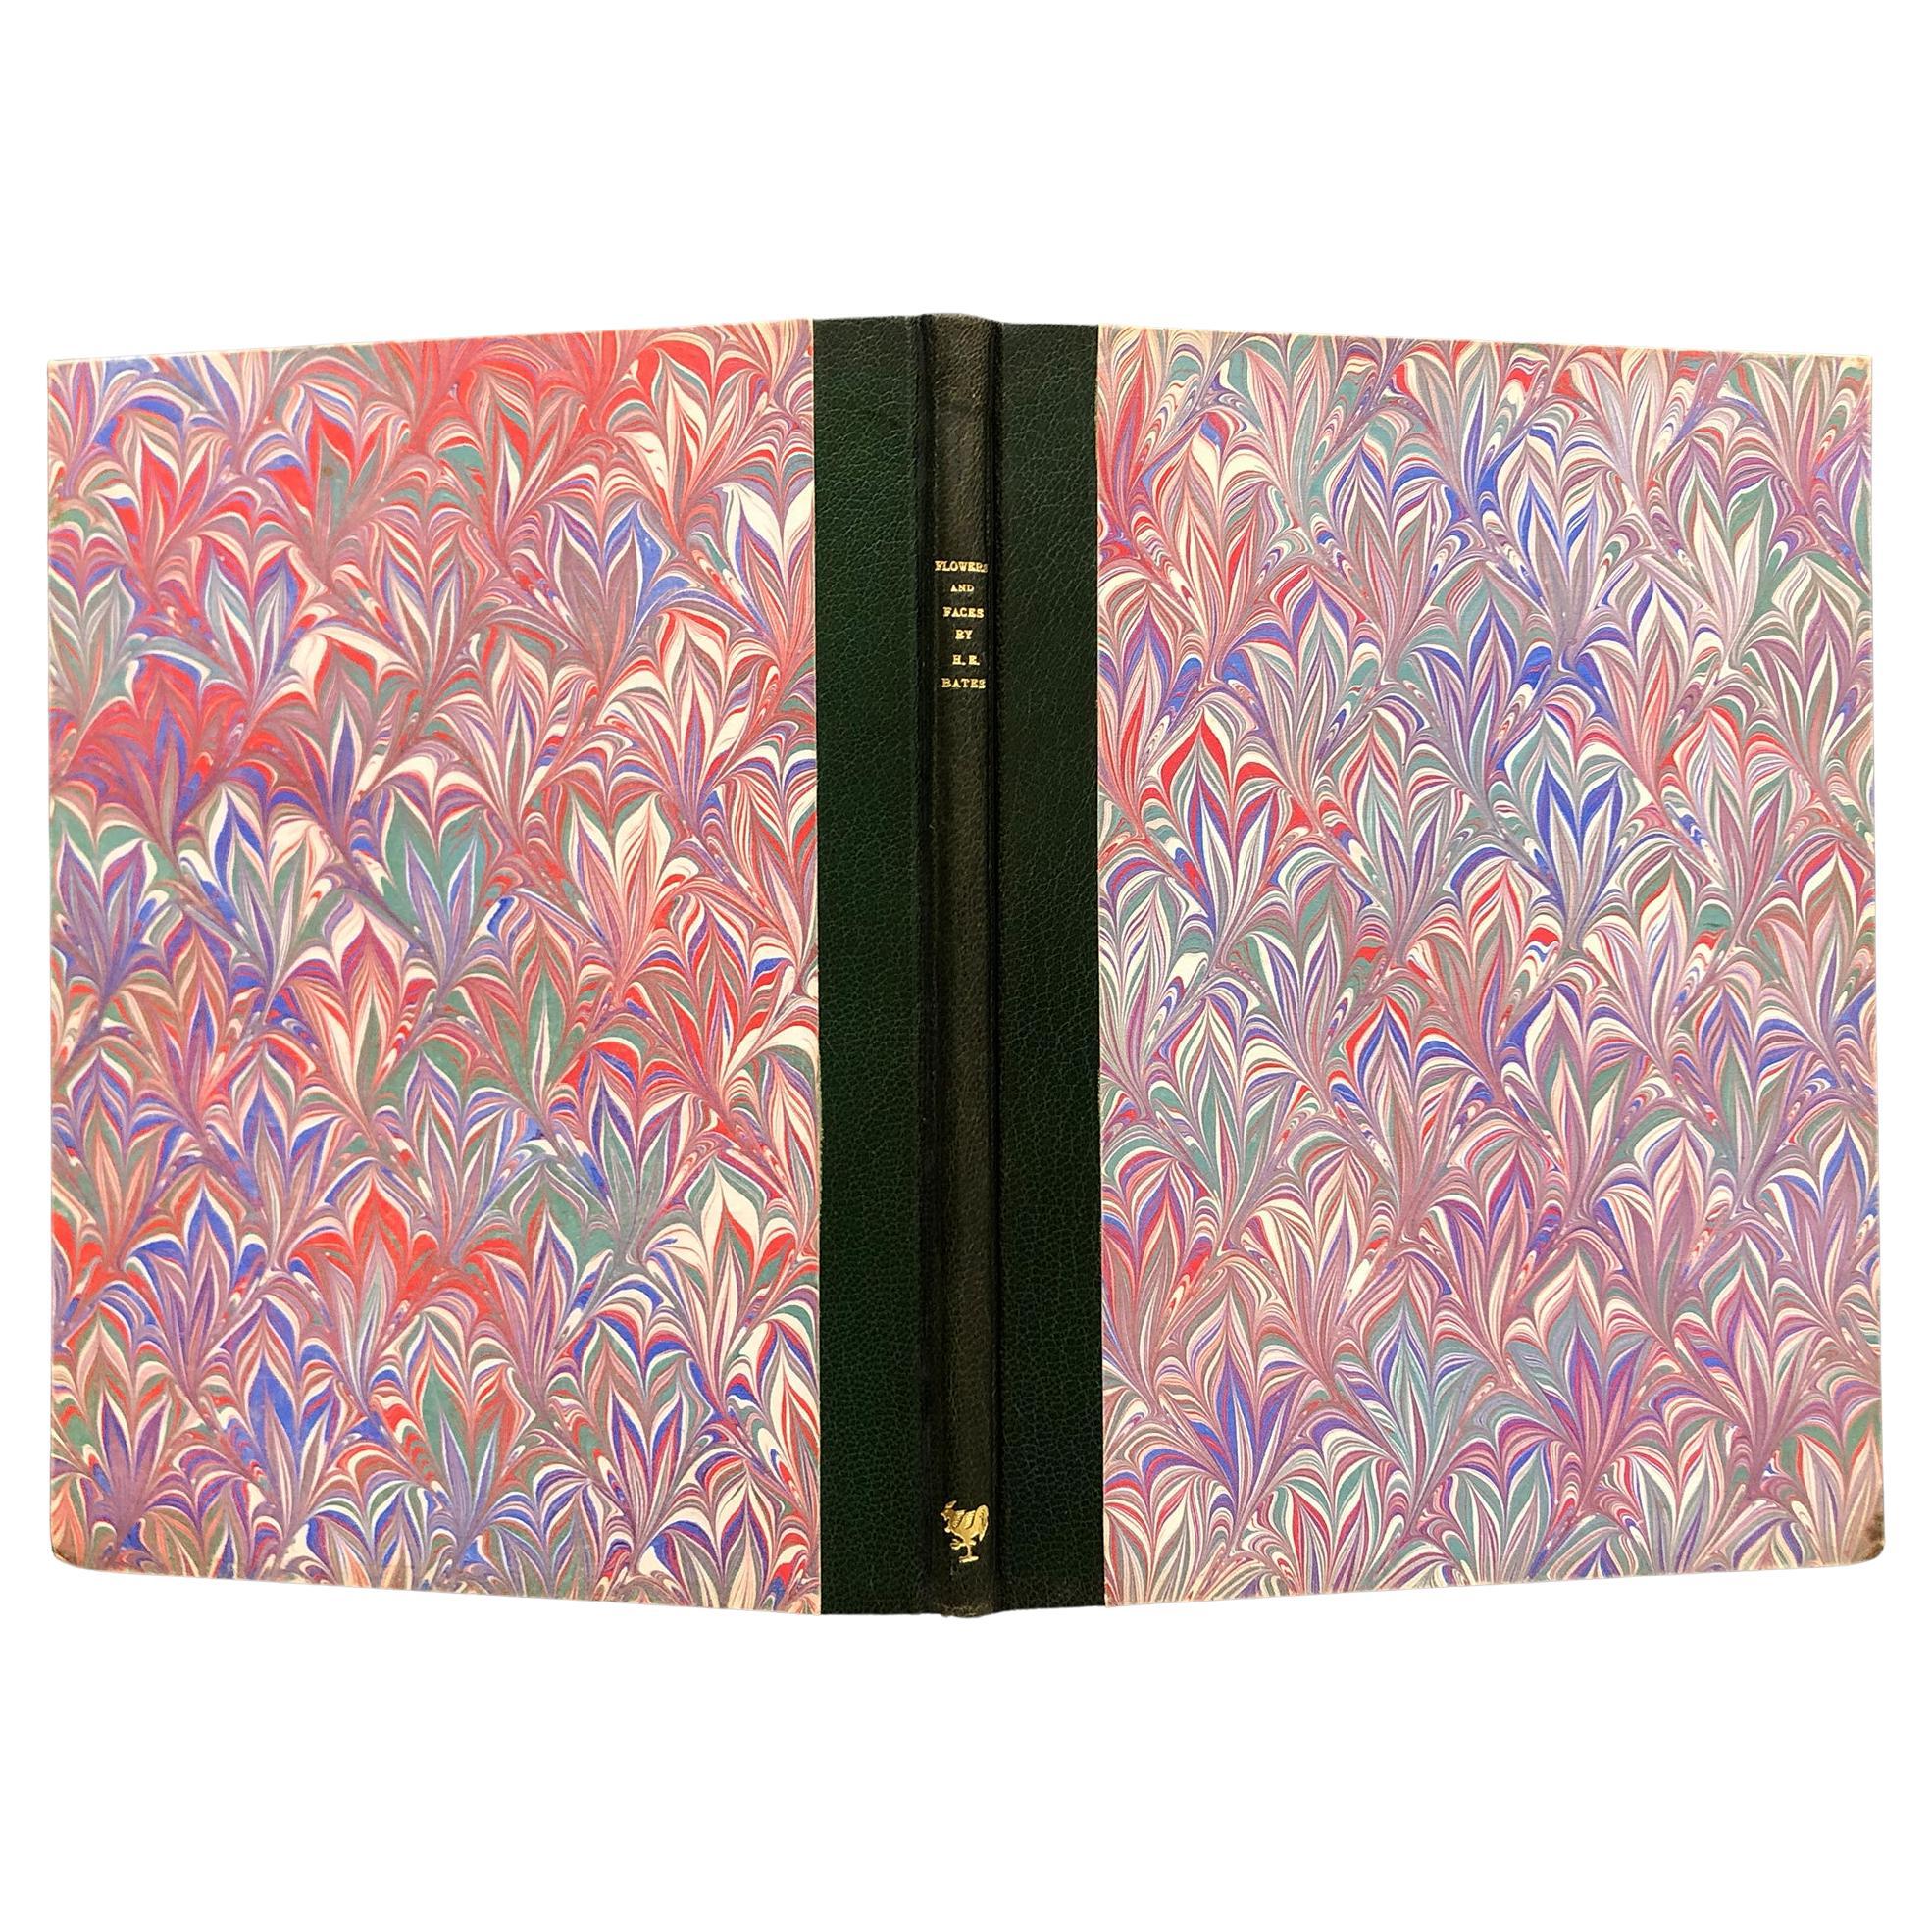 Flowers and Faces by H.E. Bates & John Nash / Golden Cockerel Press For Sale